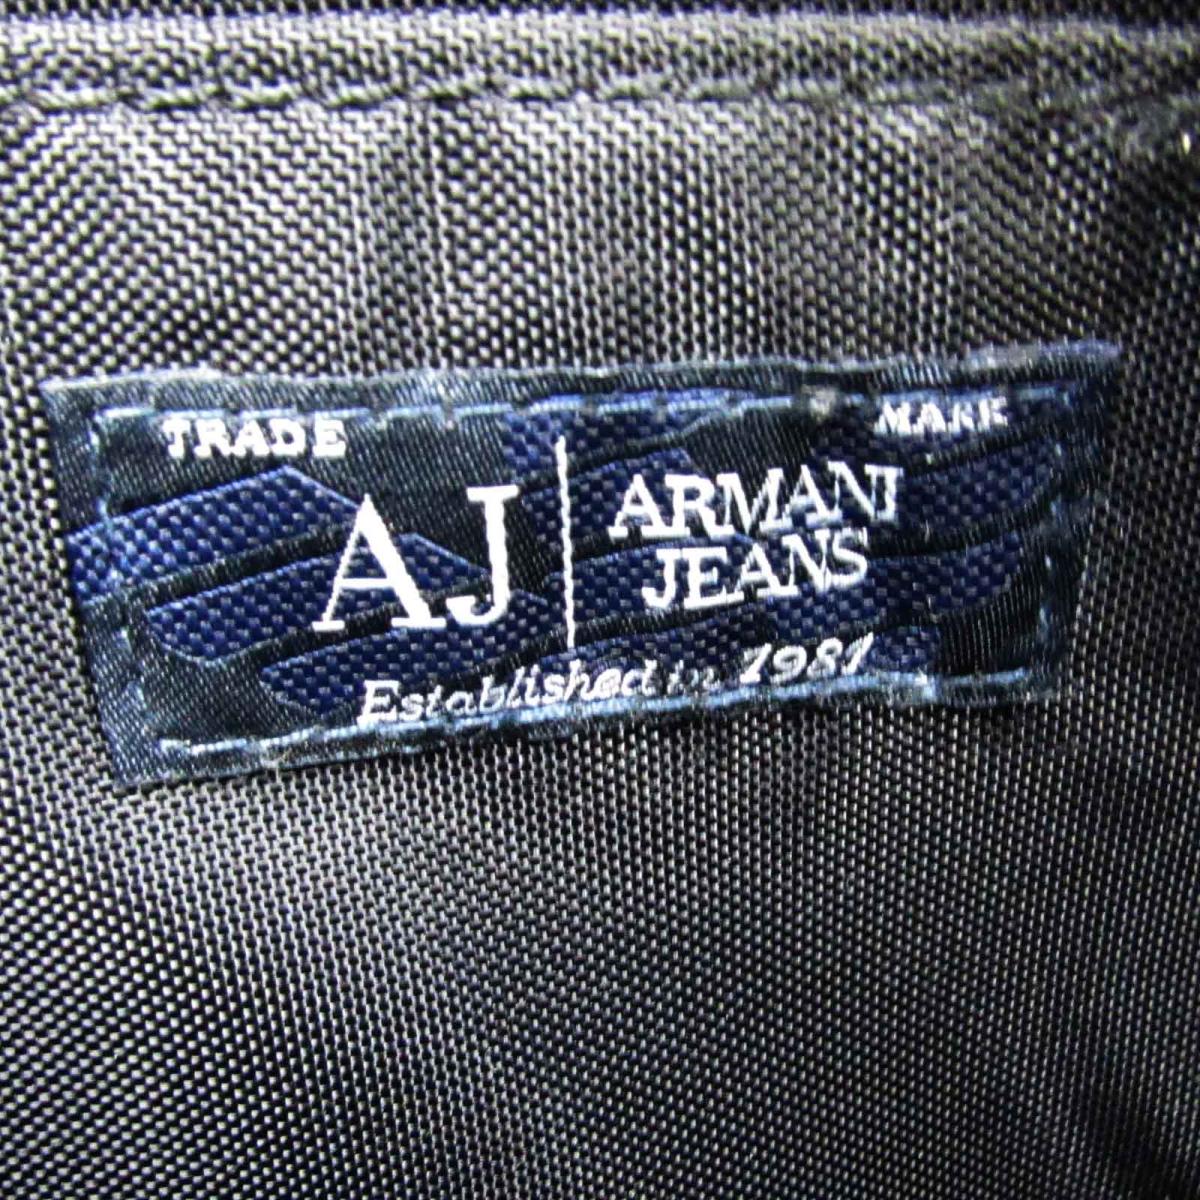 armani jeans trademark